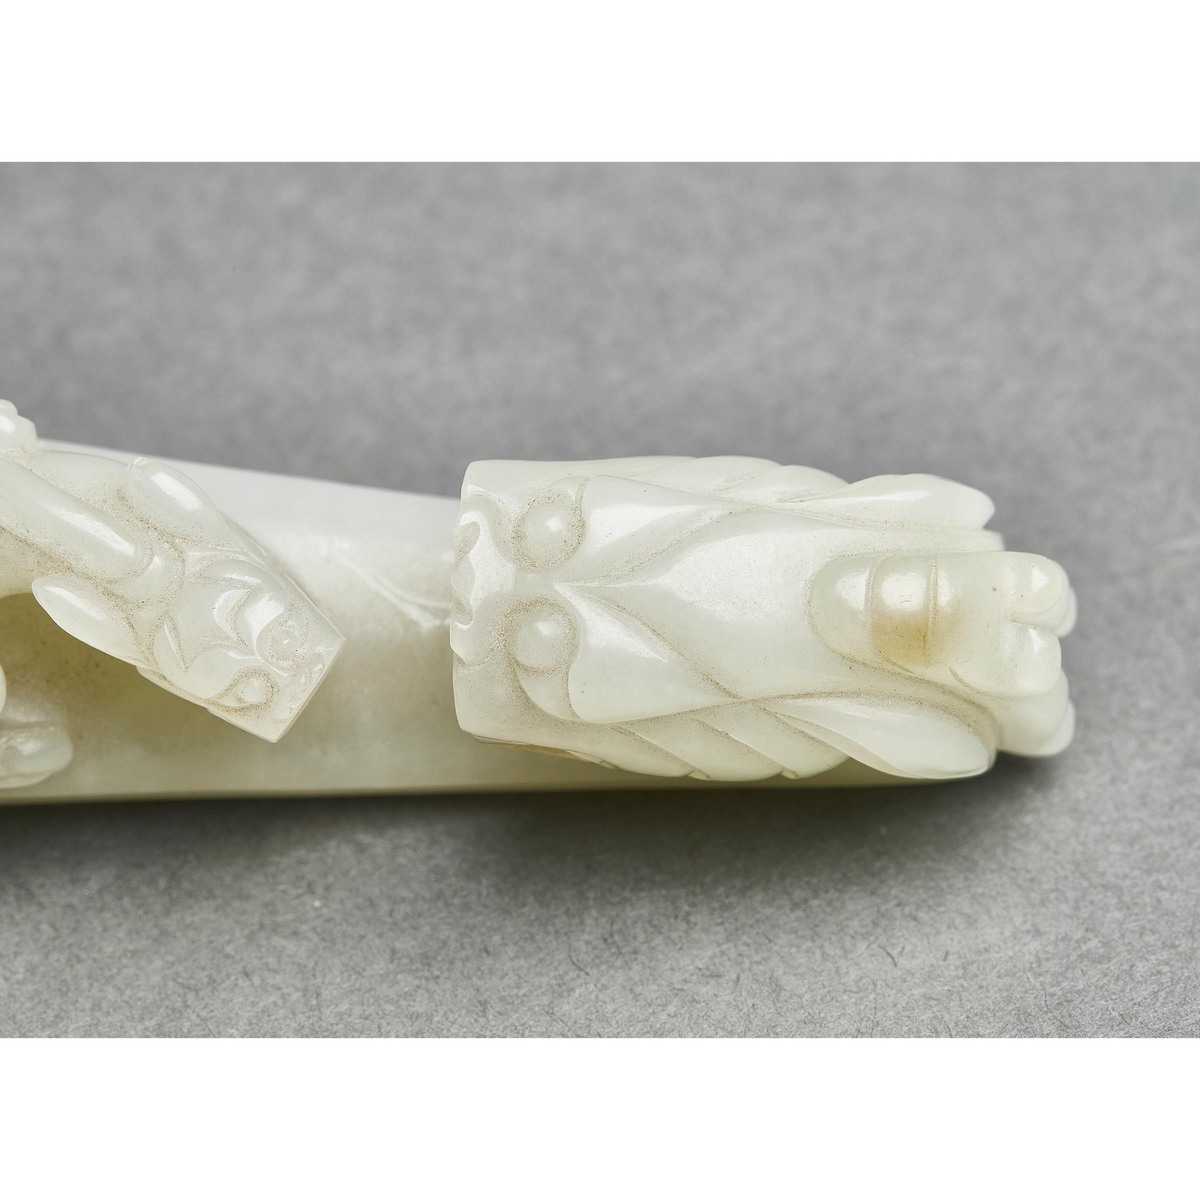 A Pale Celadon Jade 'Dragon' Belt Hook, Qing Dynasty, 清 青白玉雕'苍龙教子'带扣, length 5 in — 12.8 cm - Image 5 of 8